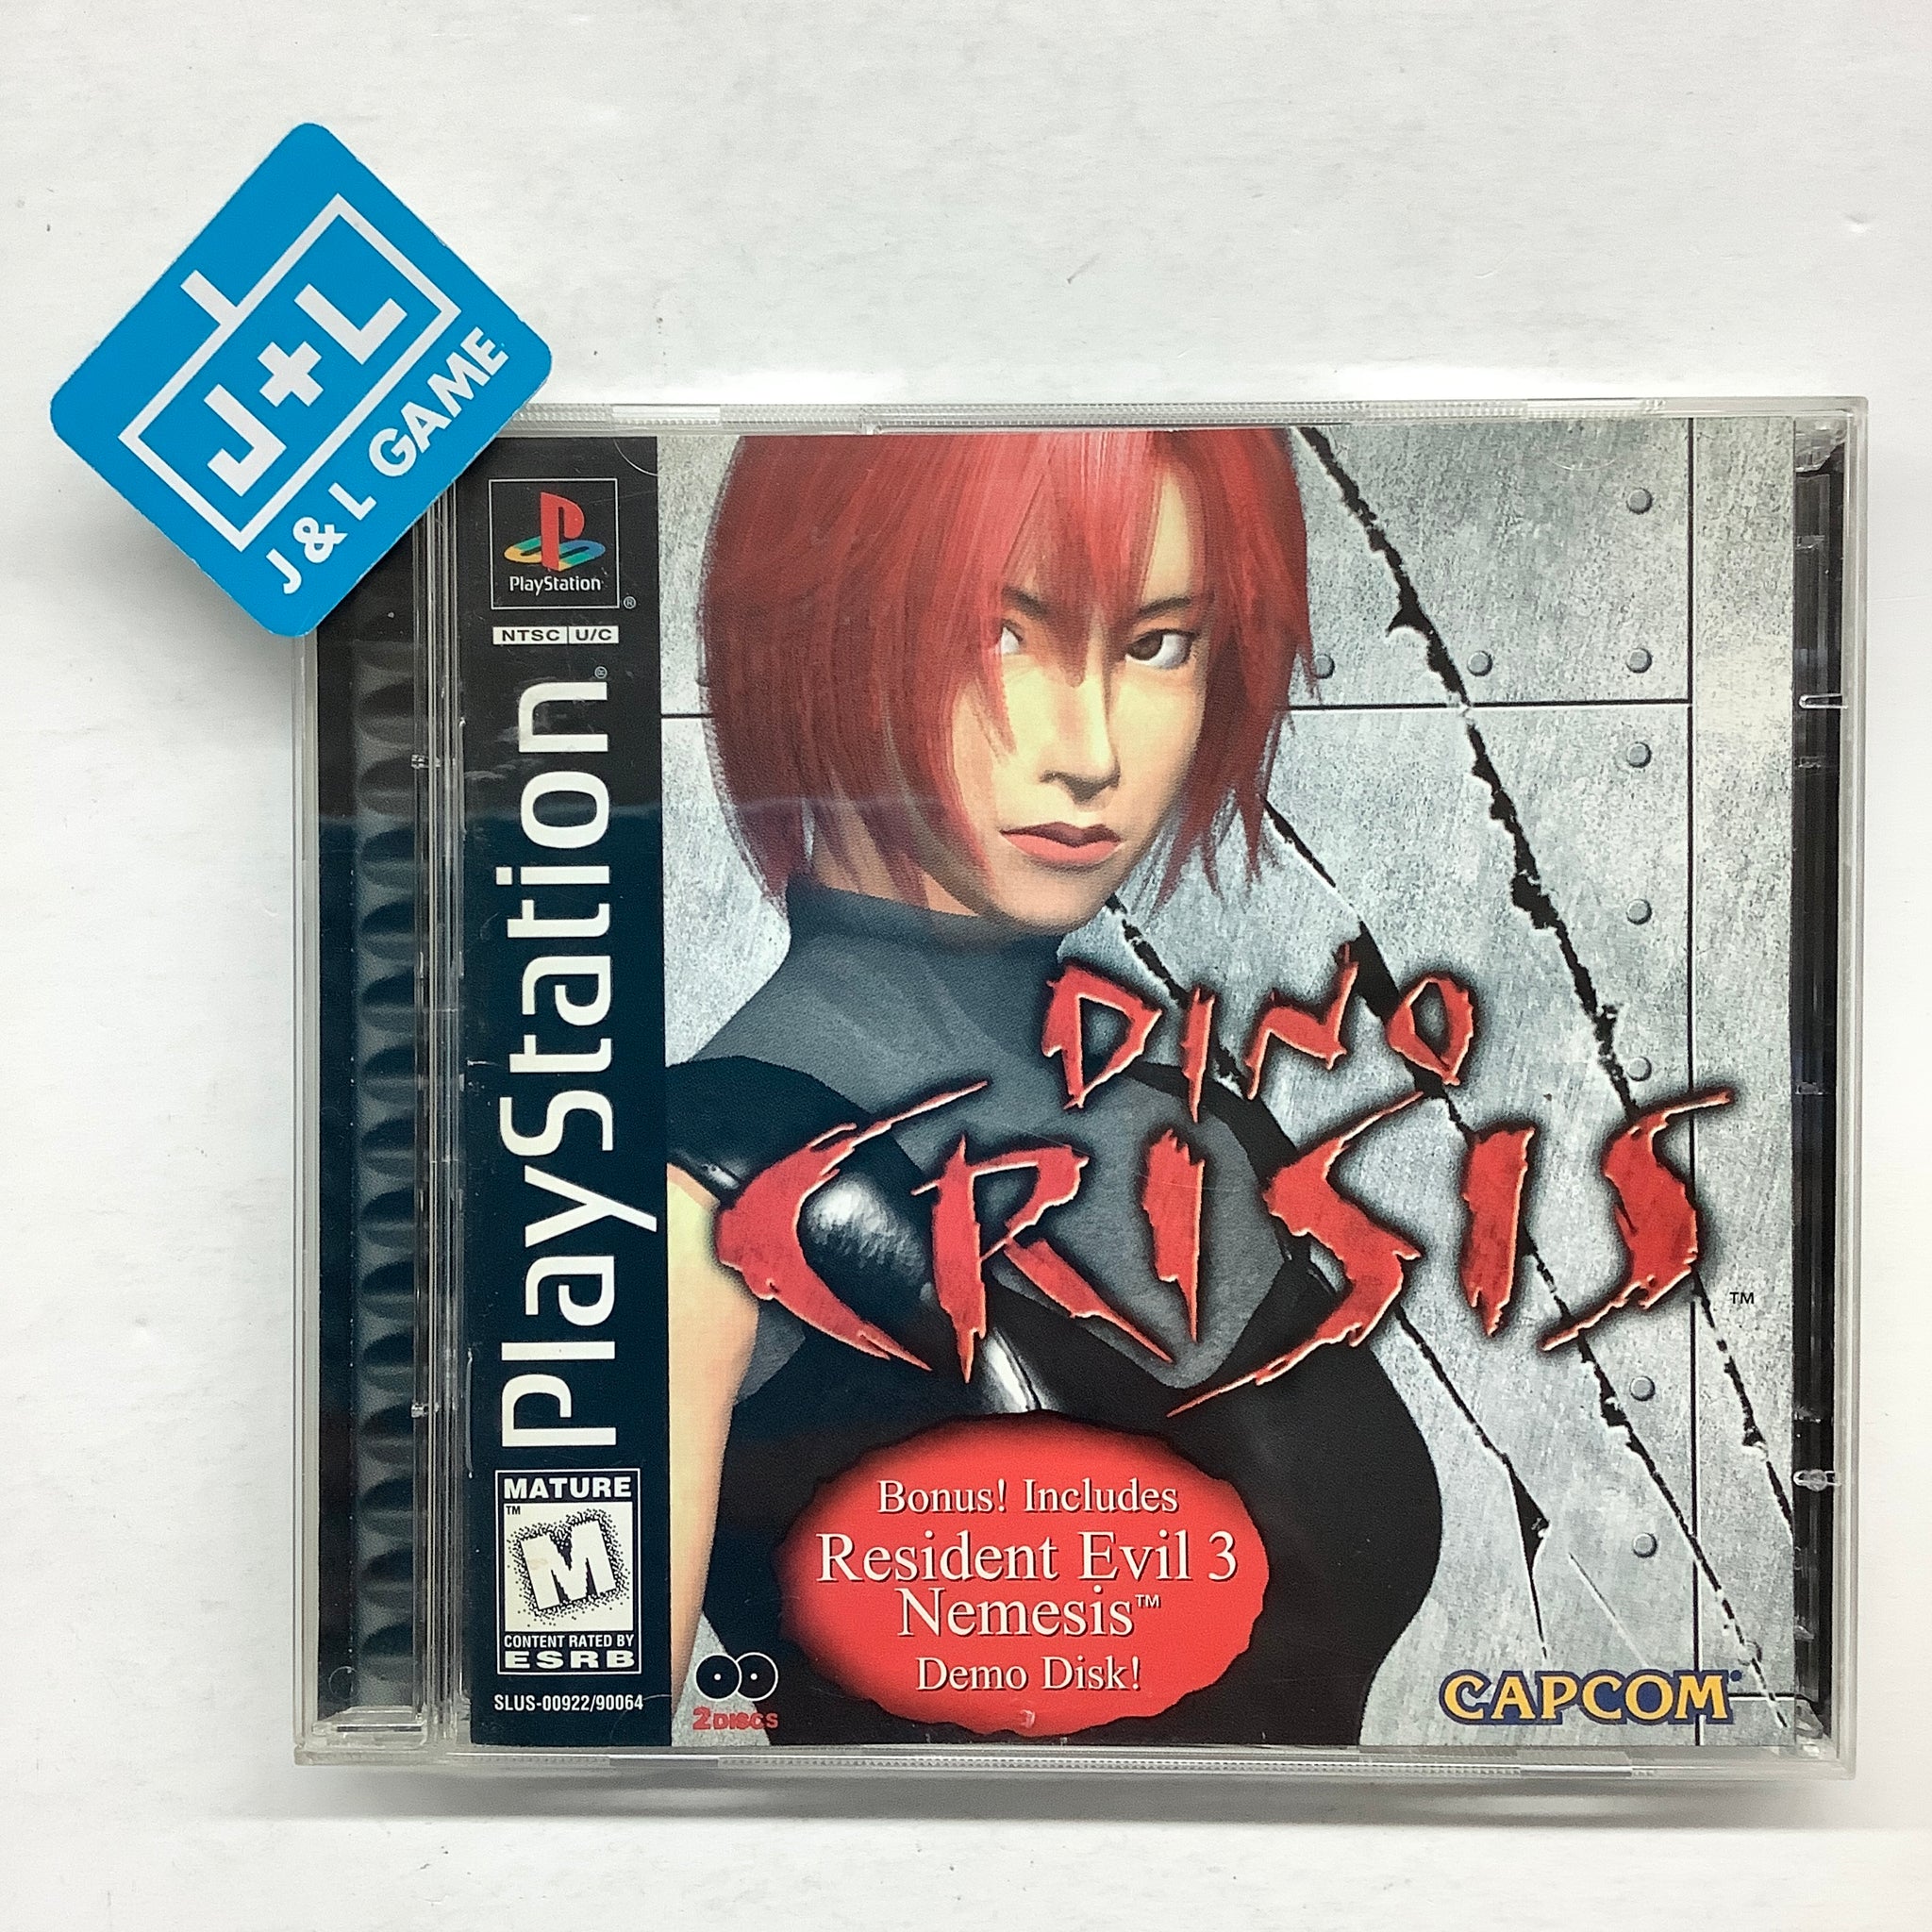 The PlayStation Classics: Dino Crisis